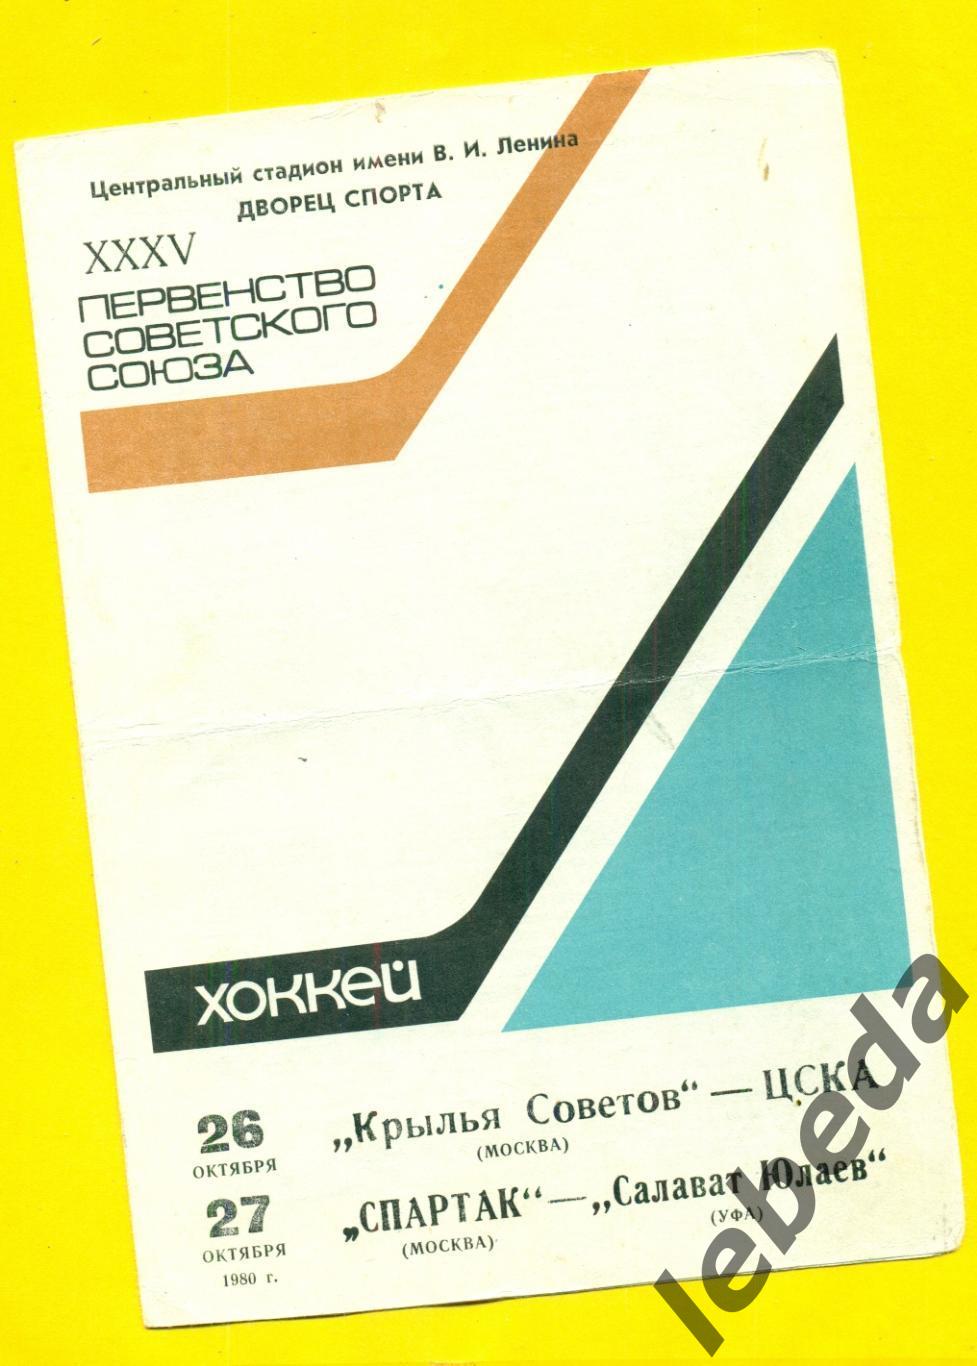 Крылья Советов Москва - ЦСКА и Спартак Москва - Салават Юлаев - 26-27.10.1980 г.